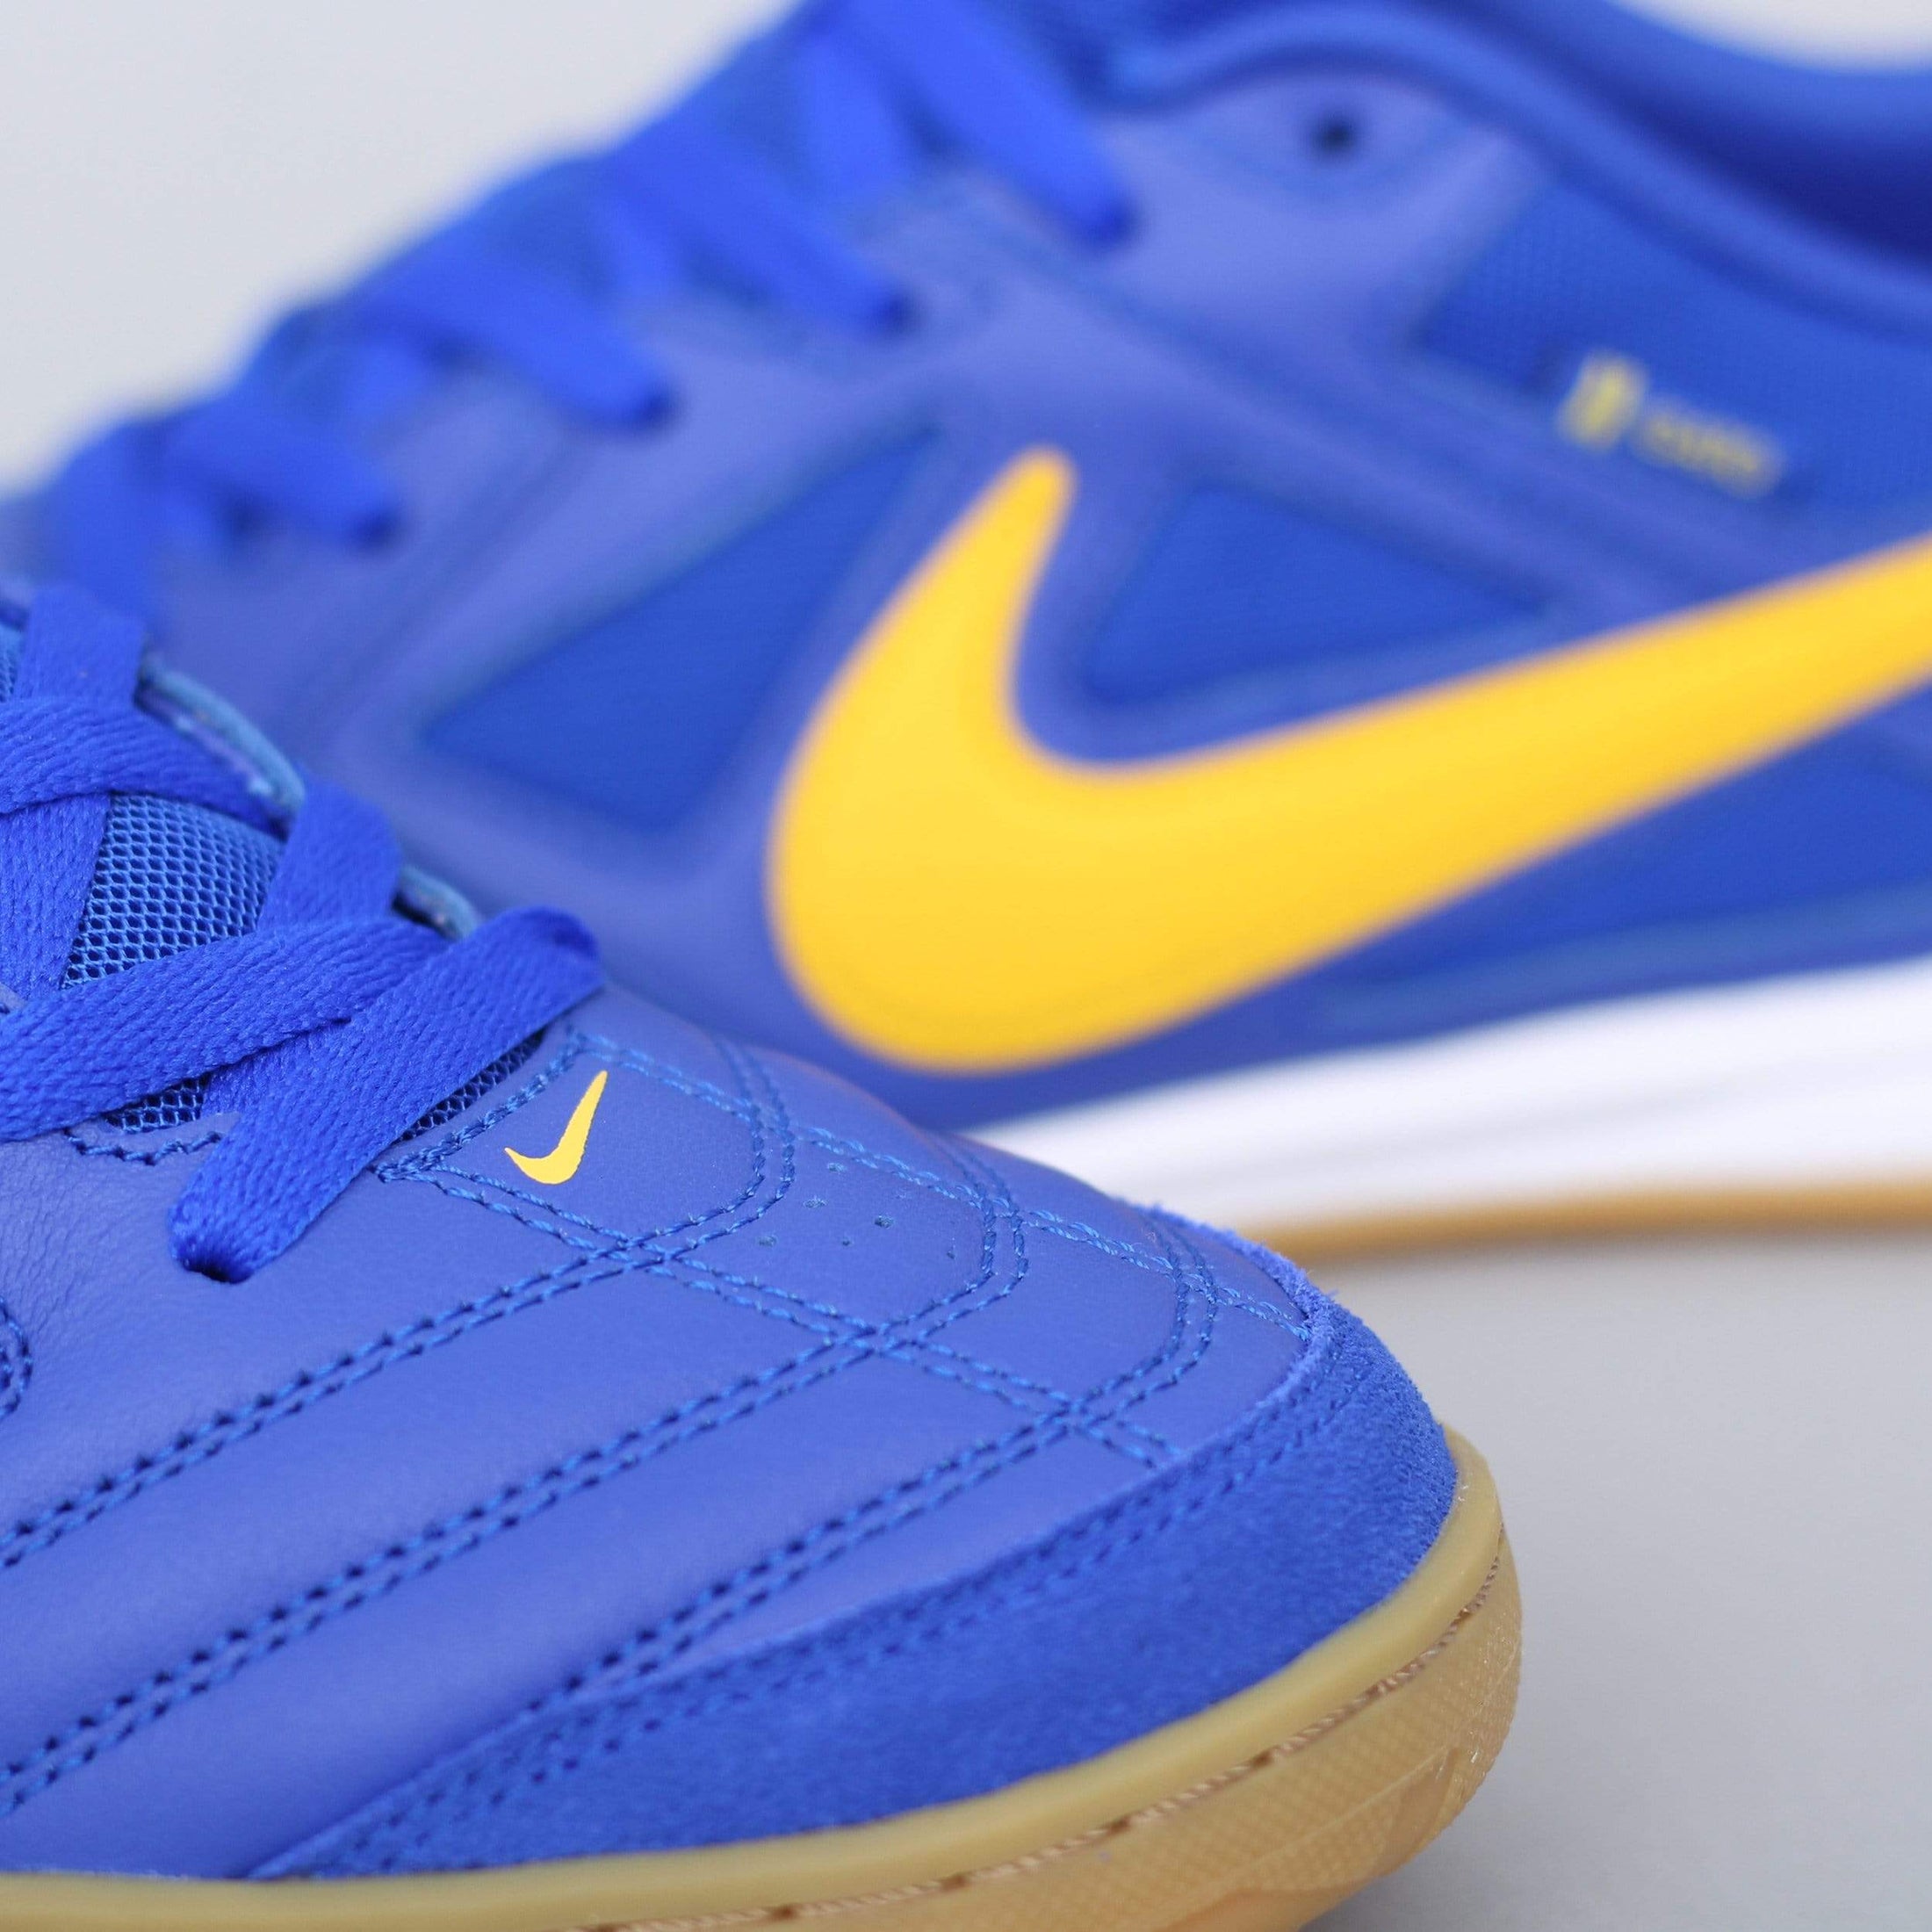 Nike SB Gato Shoes Racer Blue / Amarillo - White